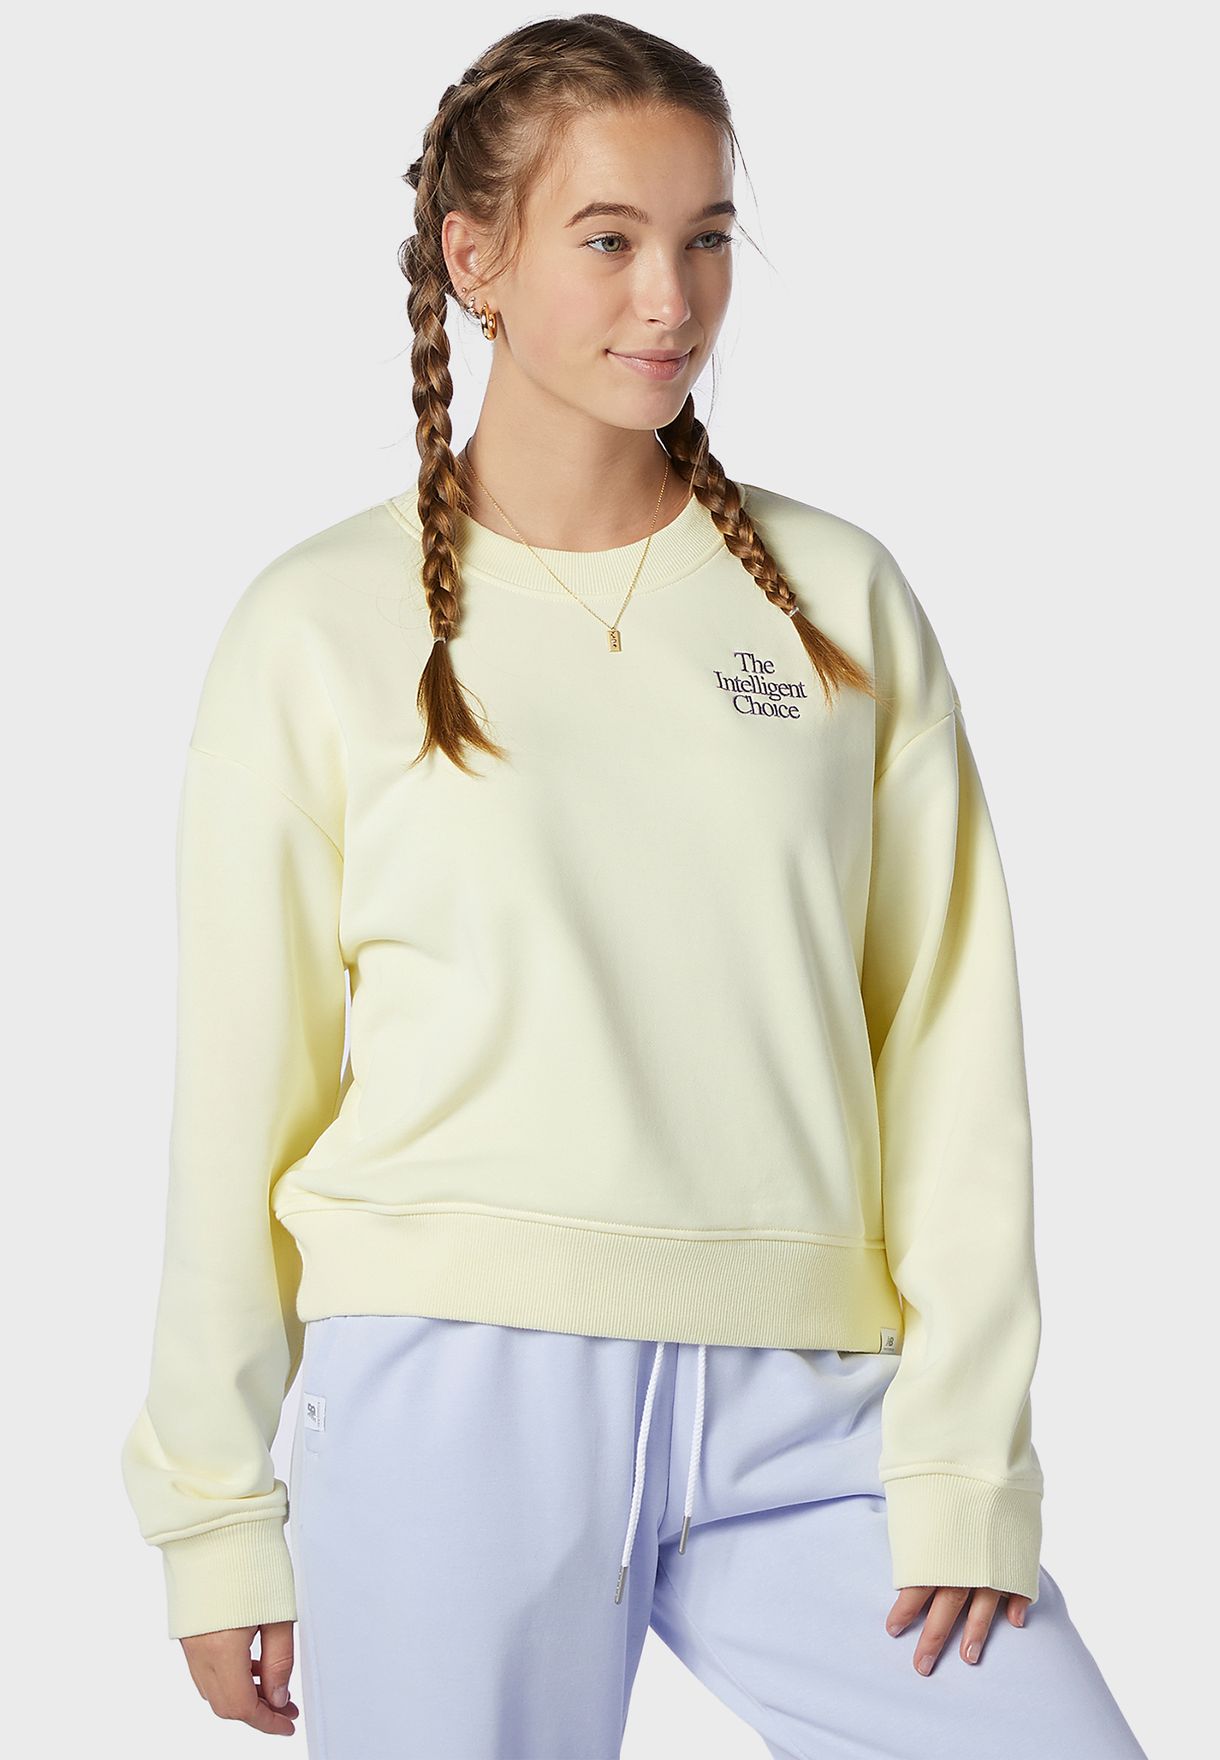 Athletics Intelligent Choice Sweatshirt